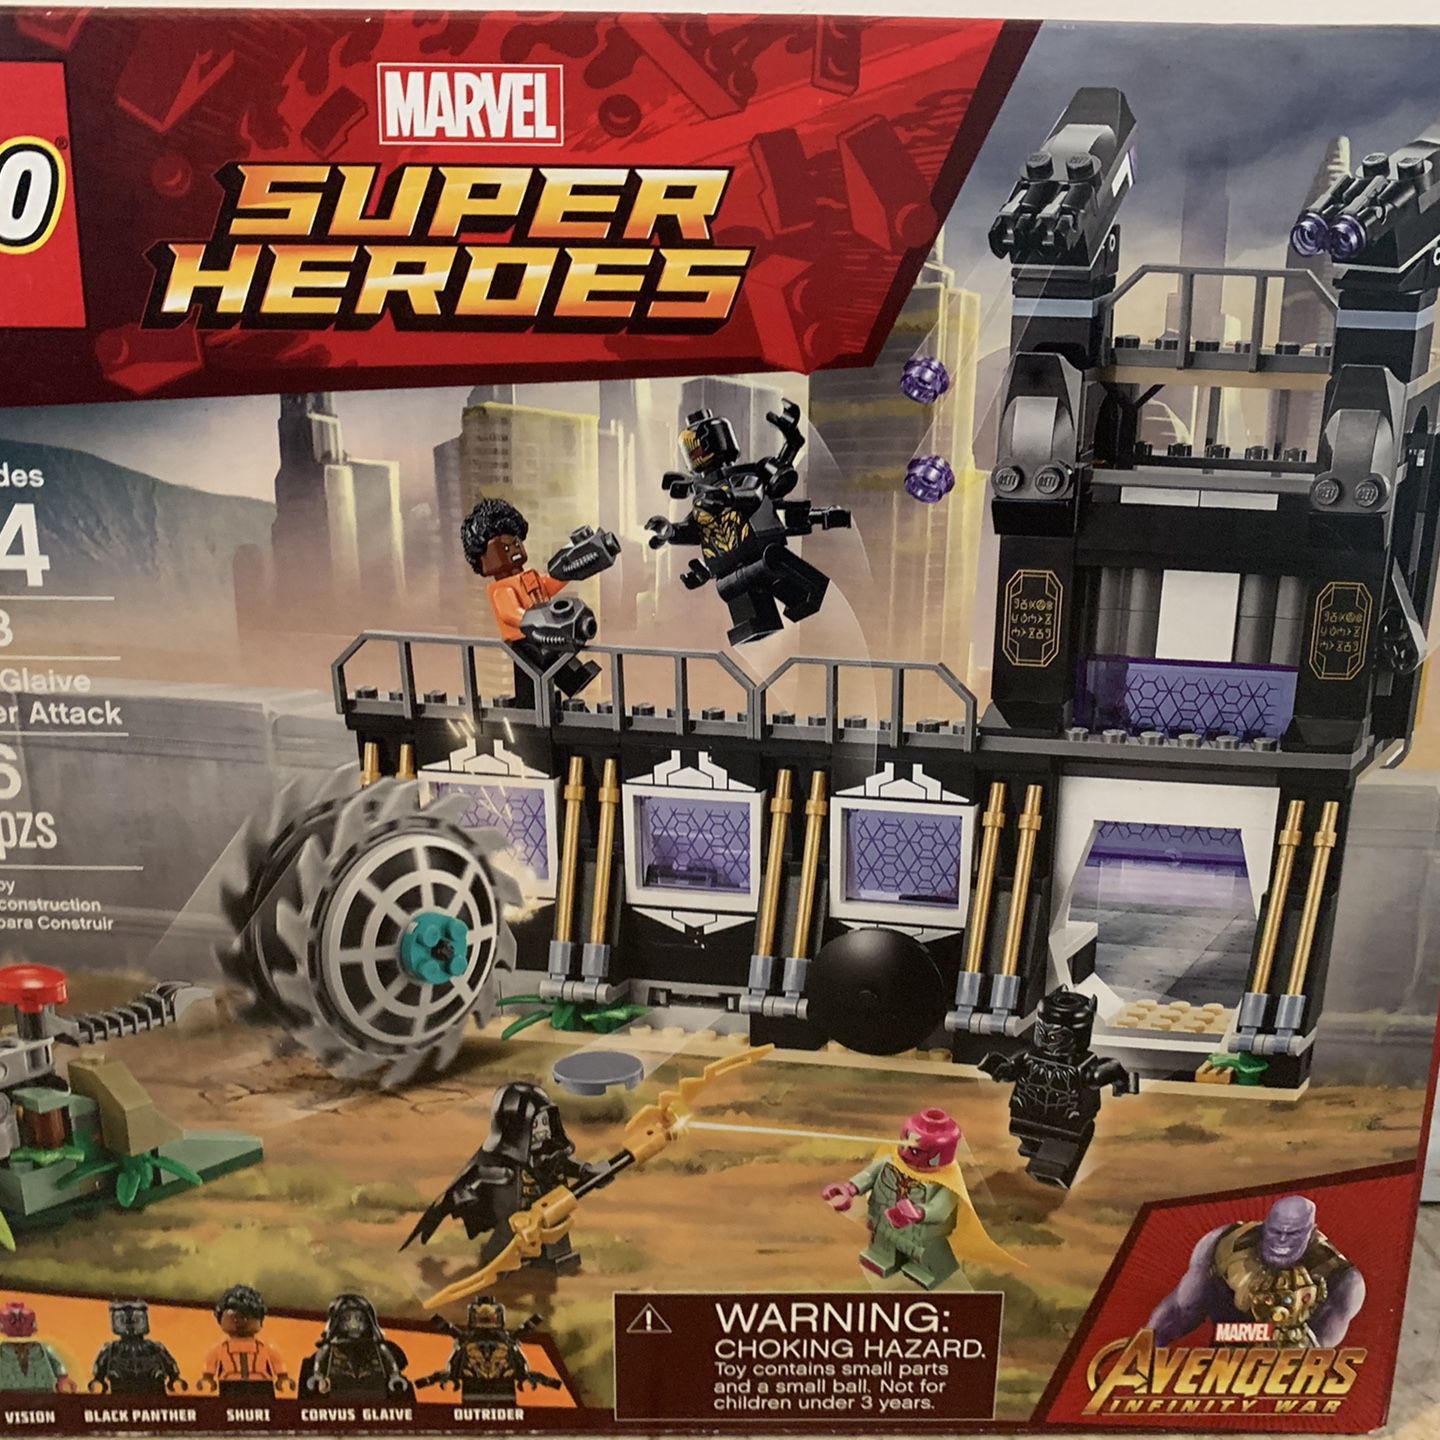 Lego Marvel Avengers Infinity War - Corvus Glaive Thresher Attack (Brand New)